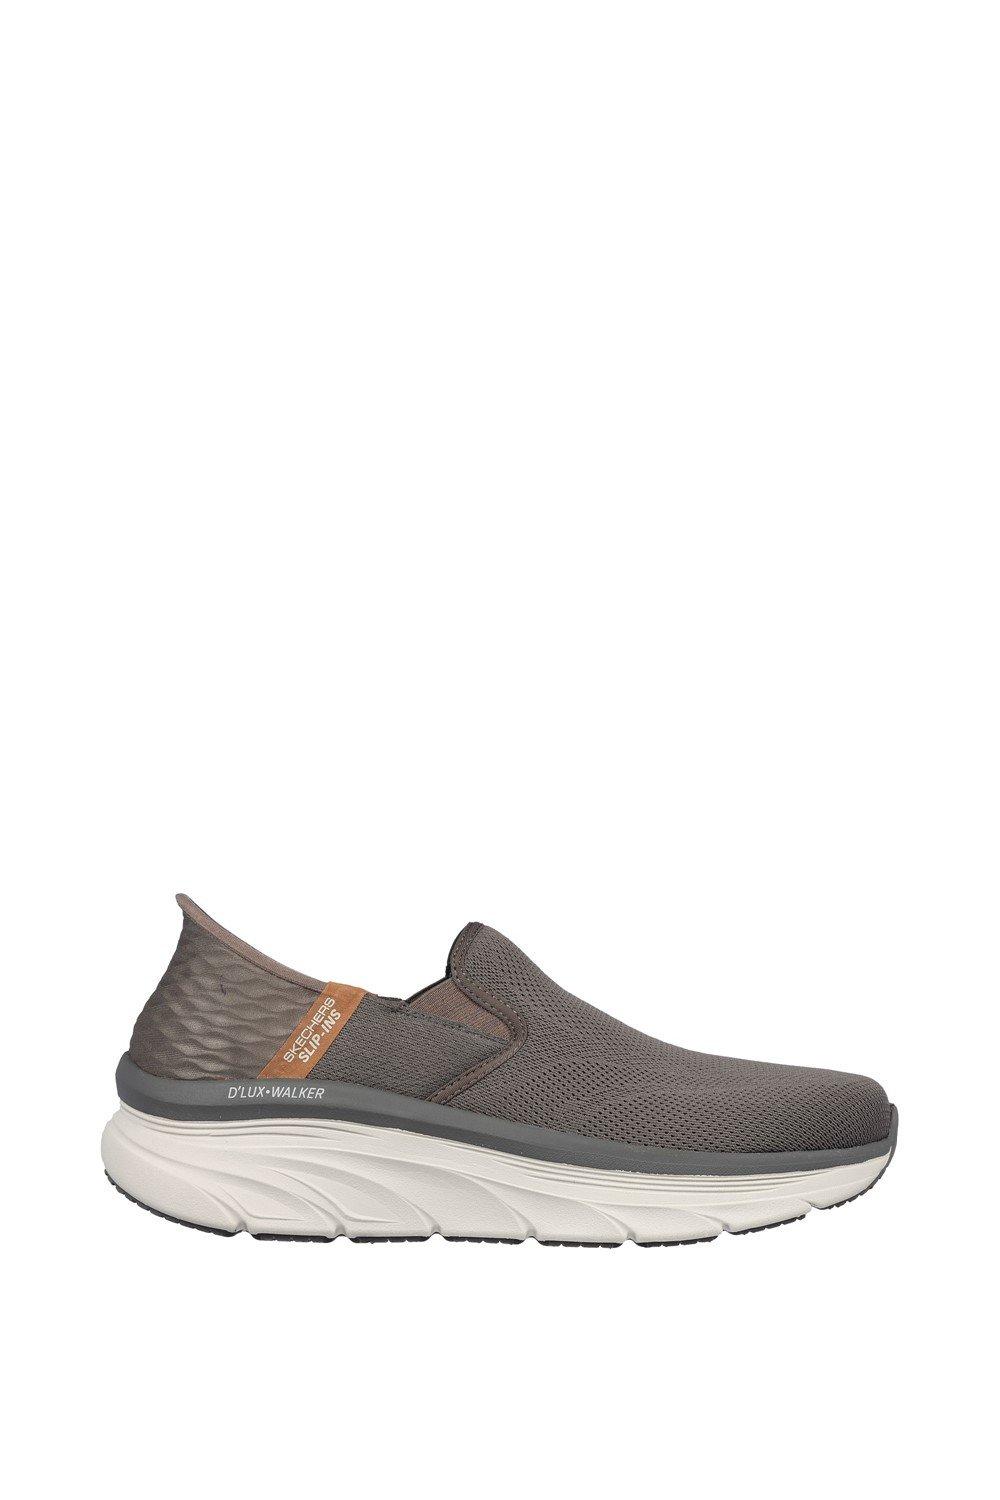 Обувь D'Lux Walker Orford Skechers, коричневый сандалии женские skechers d lux walker бежевый